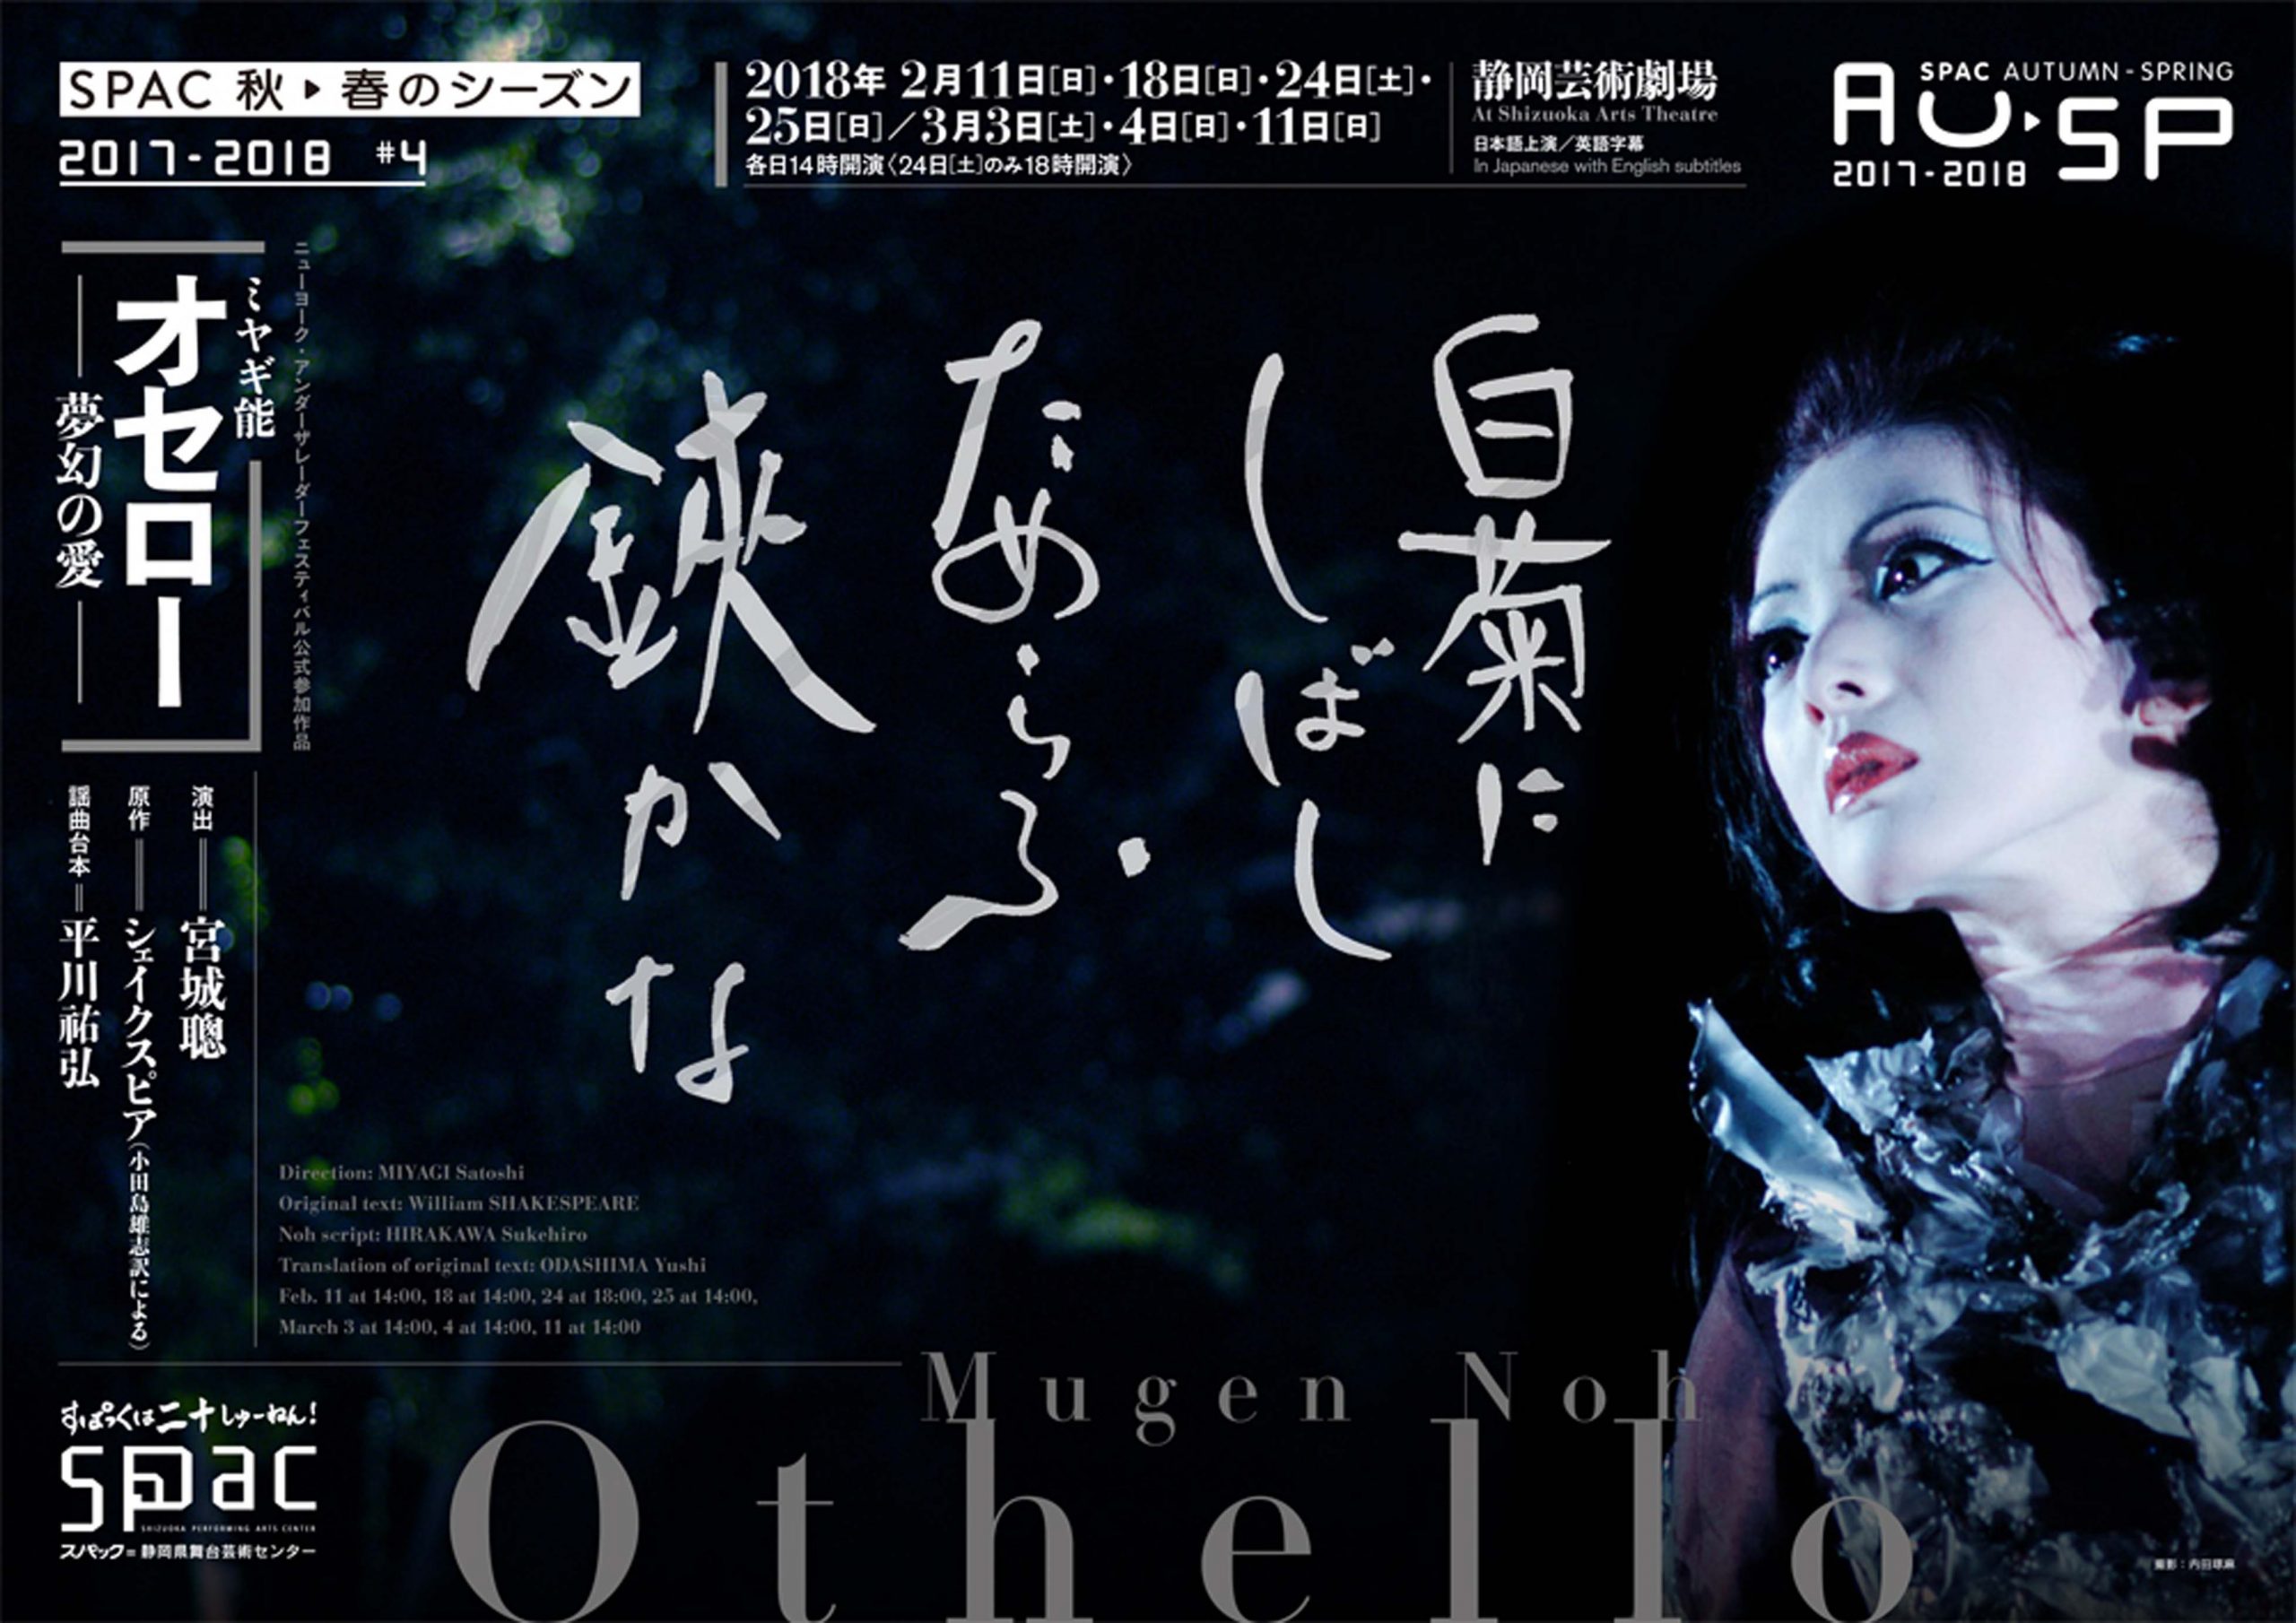 Poster for Mugen-Noh Othello